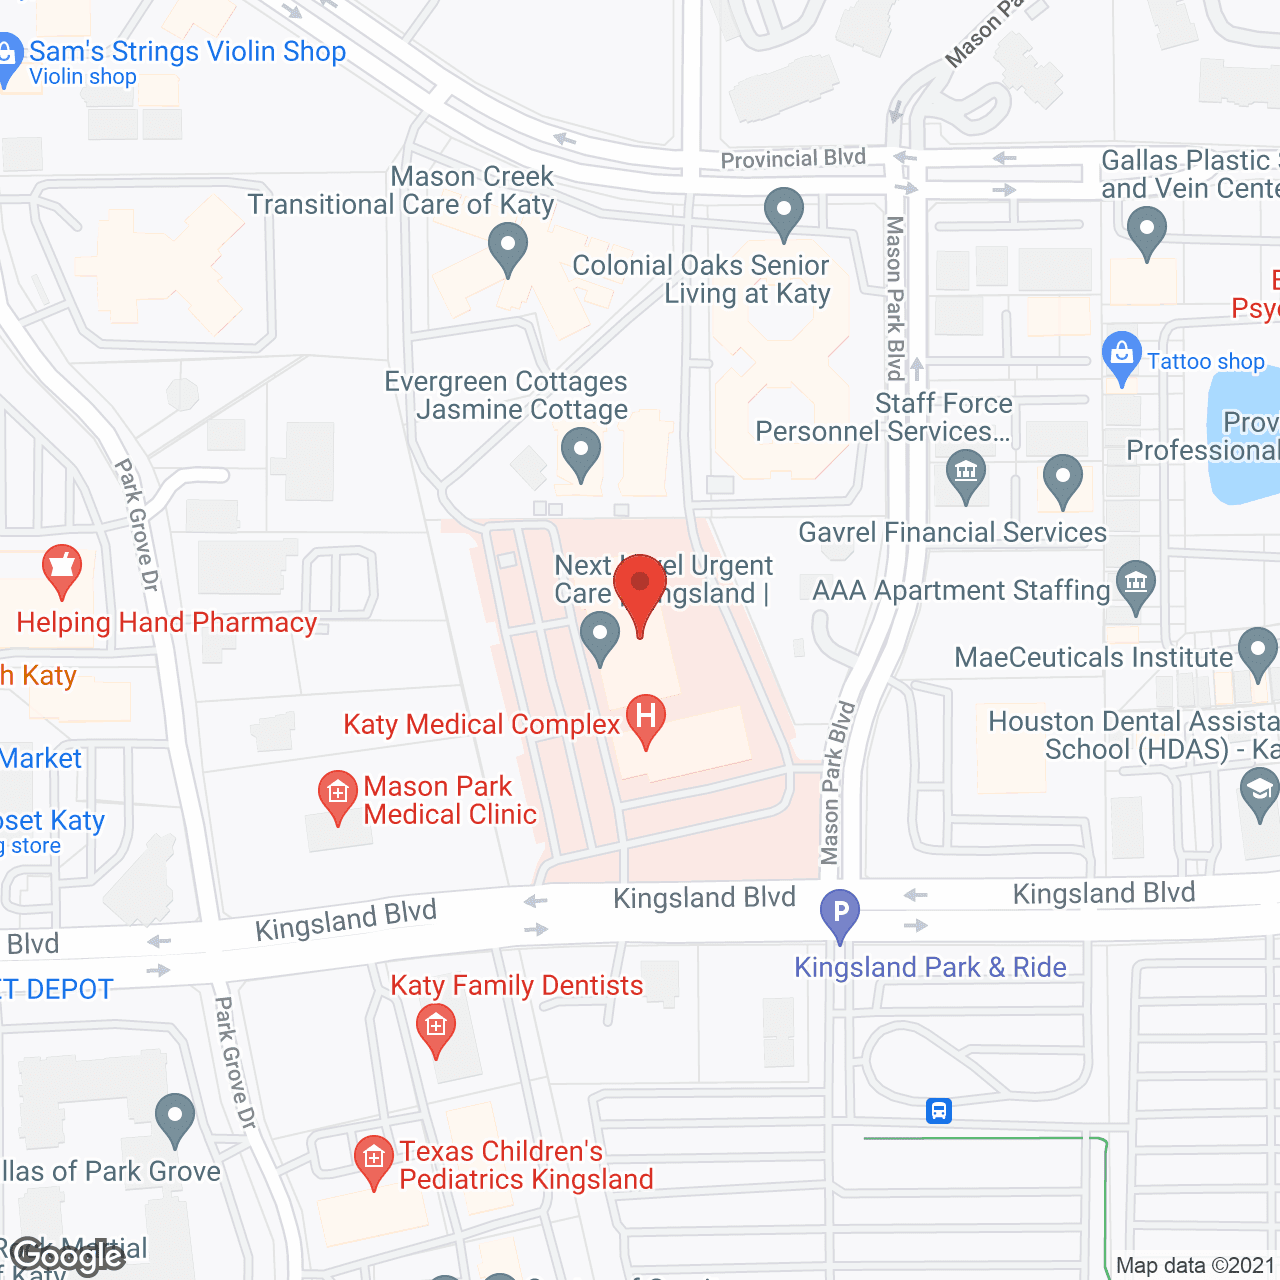 Memorial Hermann Rehabilitation Hospital - Katy in google map